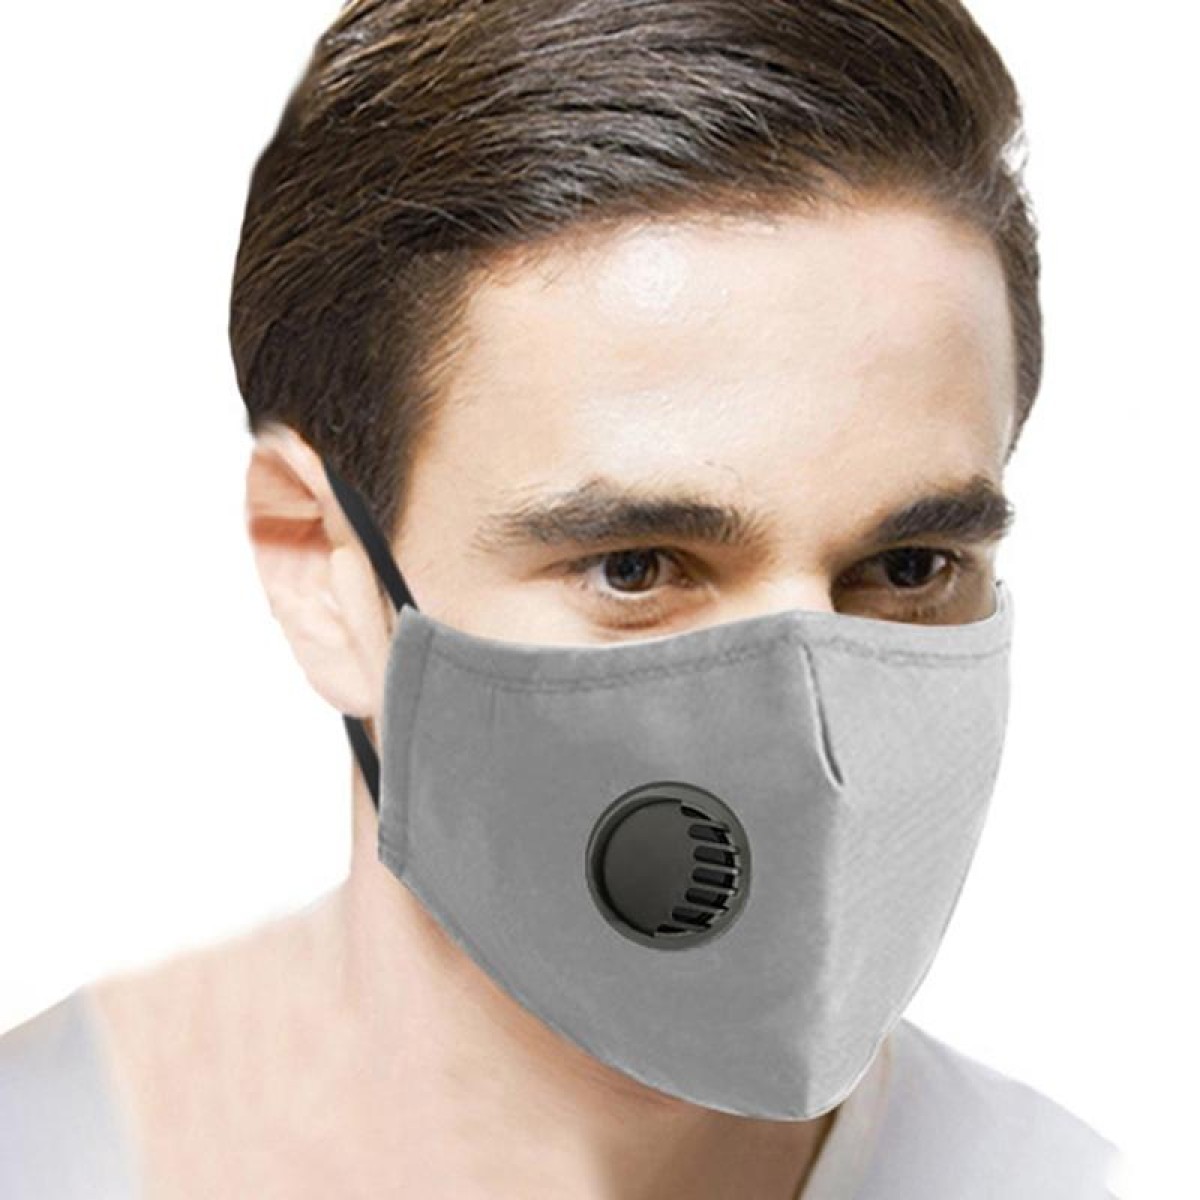 For Men Women Washable Replaceable Filter Breath-Valve PM2.5 Dustproof Face Mask(Grey)